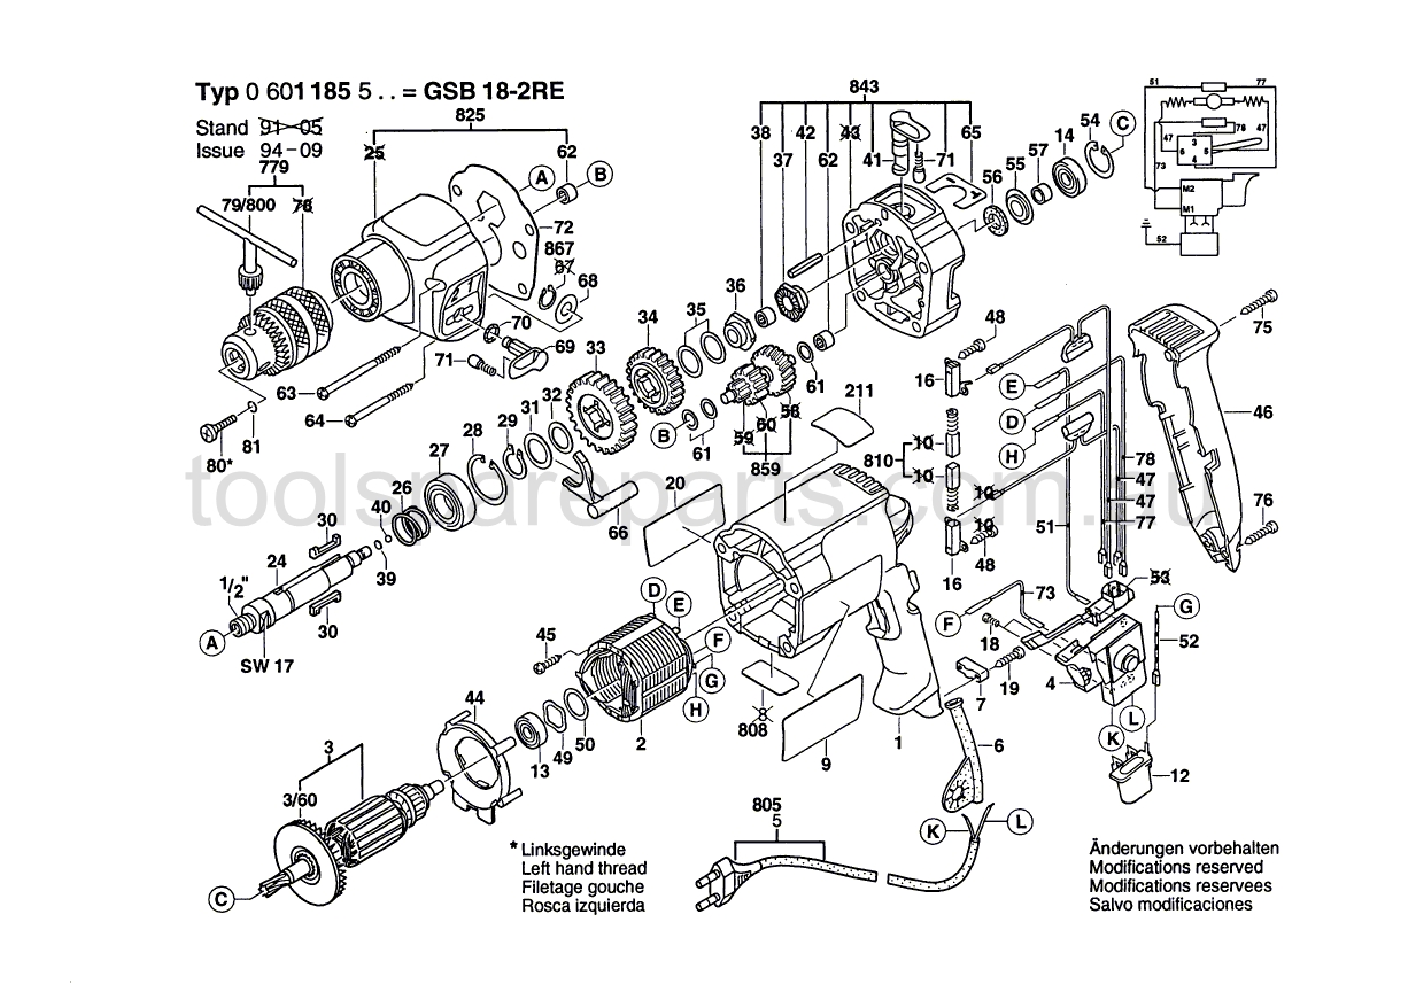 Bosch GSB 18-2 RE 0601185537  Diagram 1